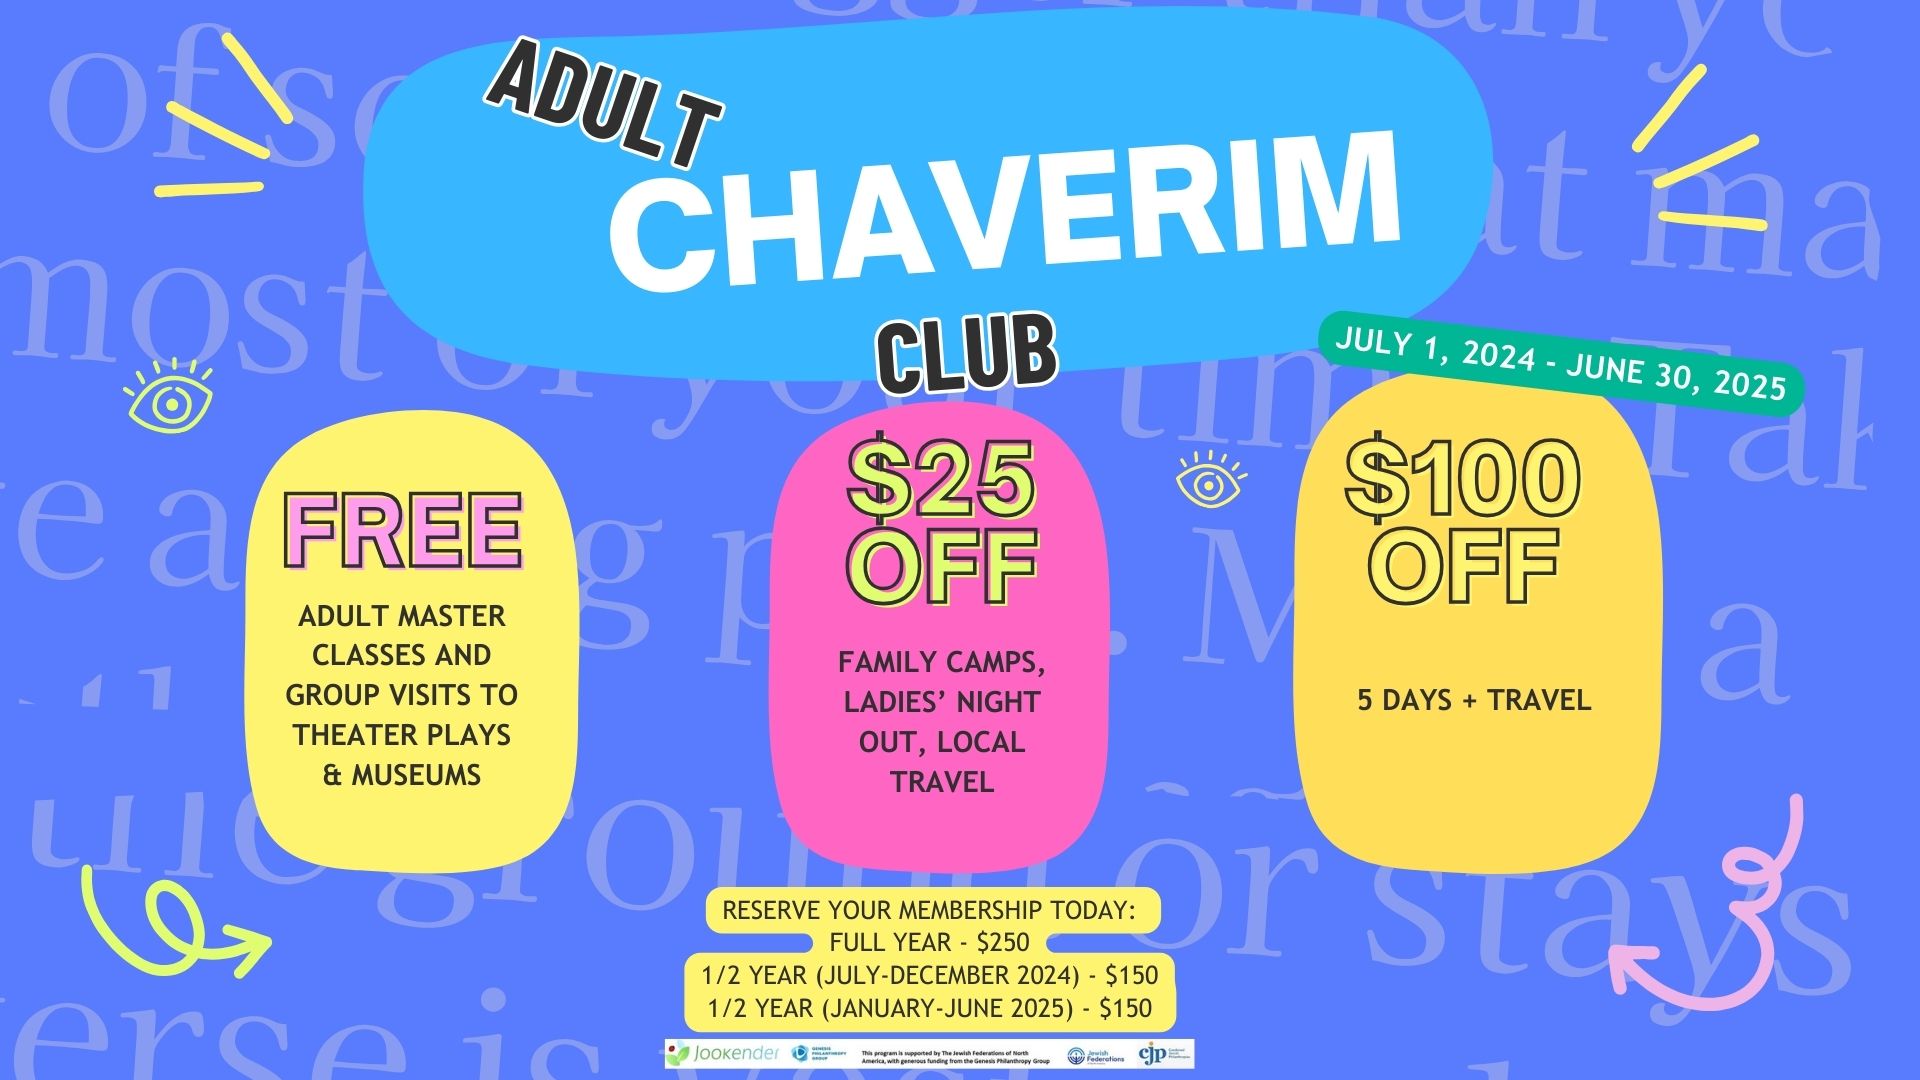 Adult 21+ Club "Chaverim"